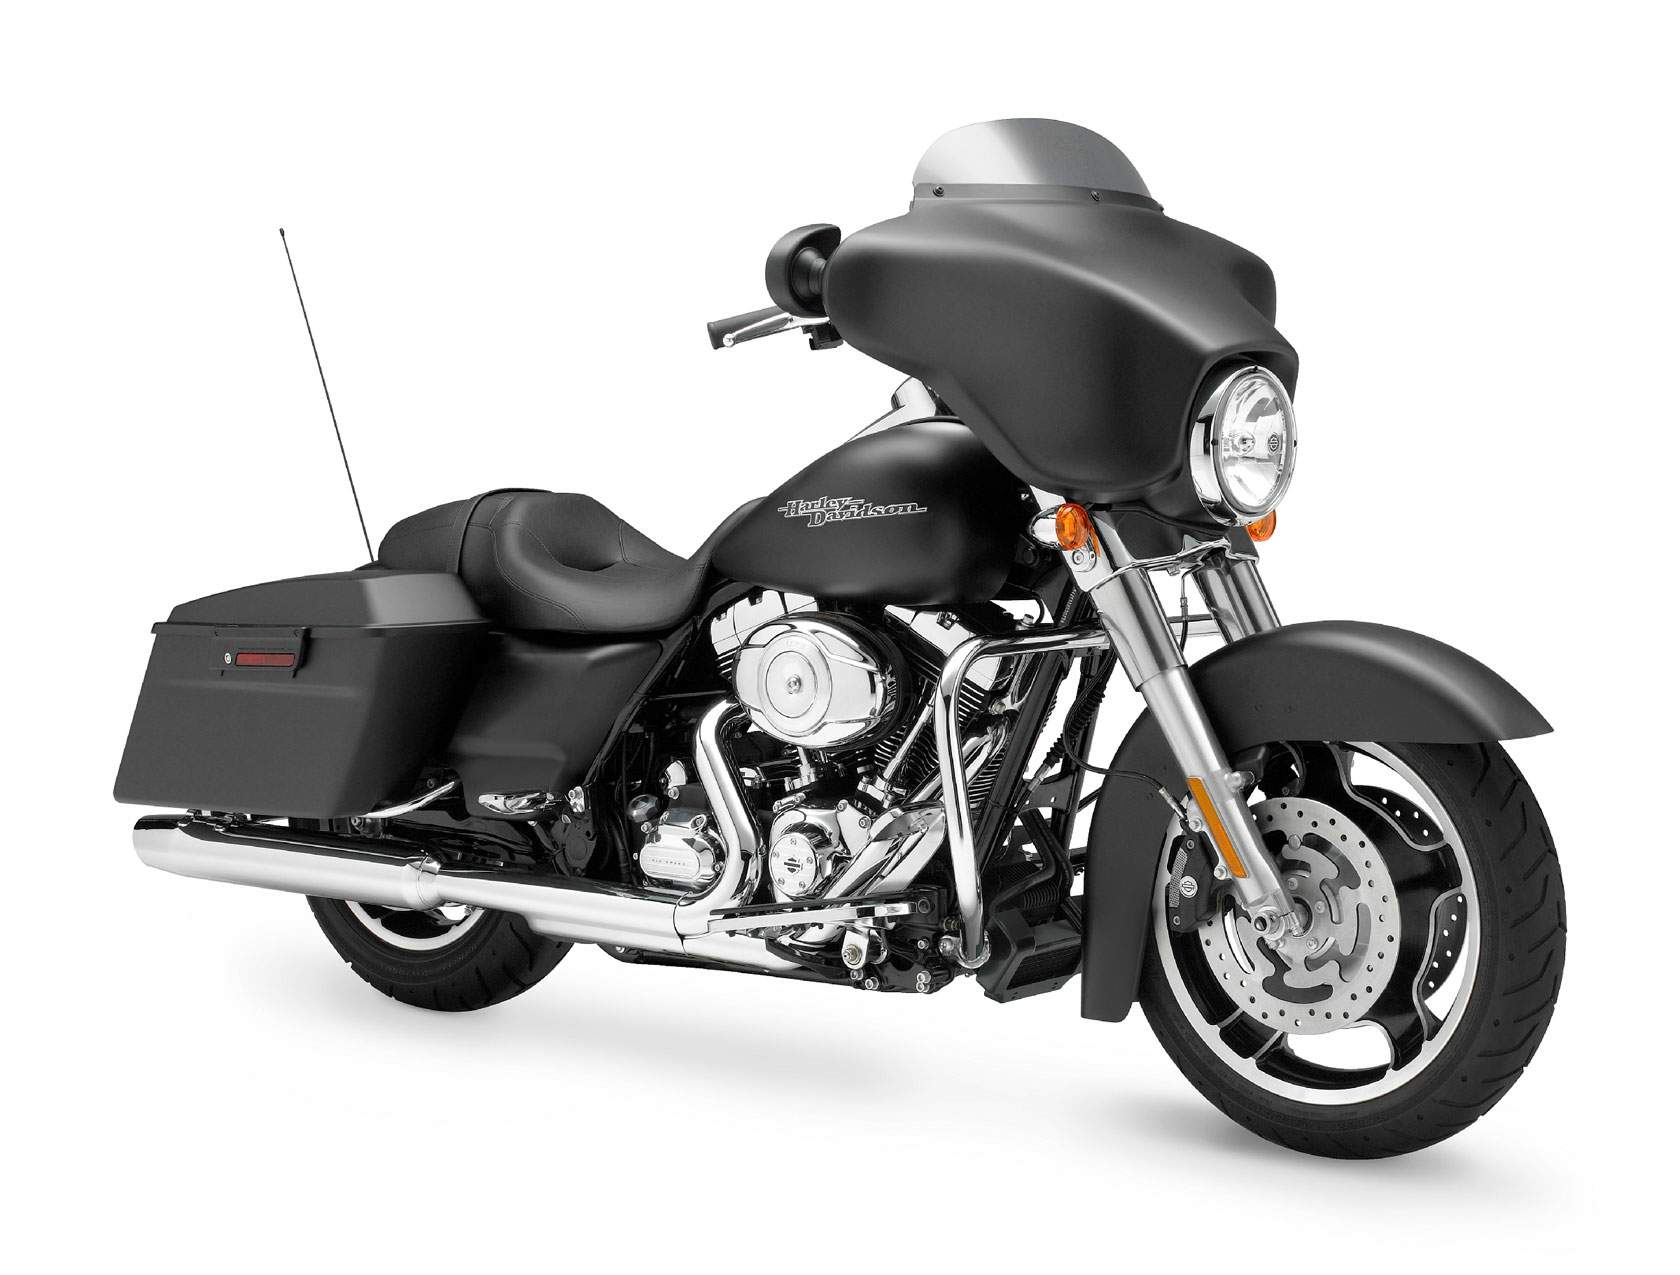 Harley-Davidson Harley Davidson FLHX Street Glide (2011) especificaciones técnicas